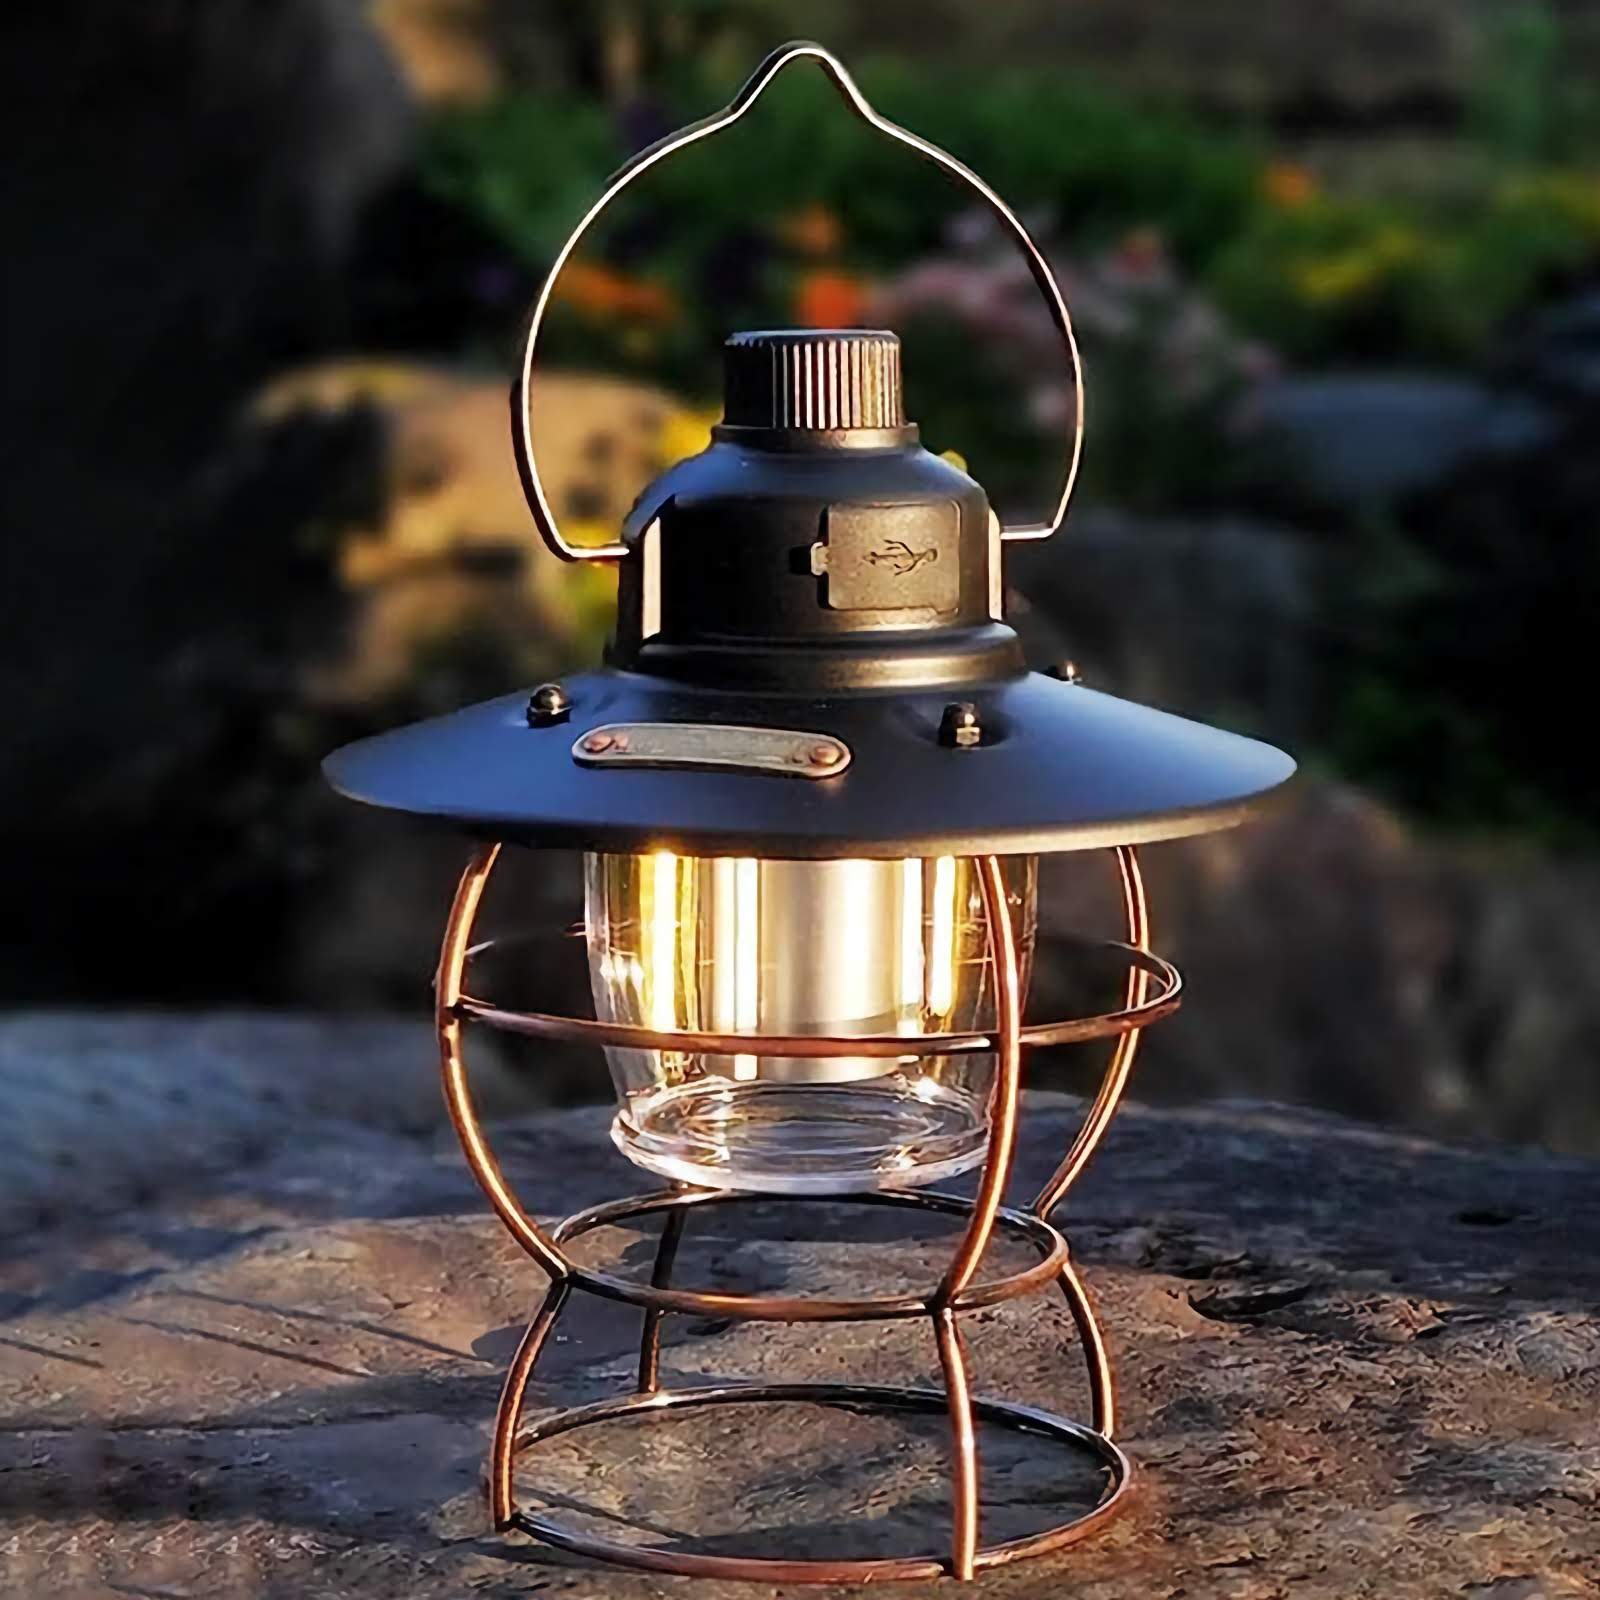 High Brightness Rechargeable Led Vintage Lantern - Hokolite